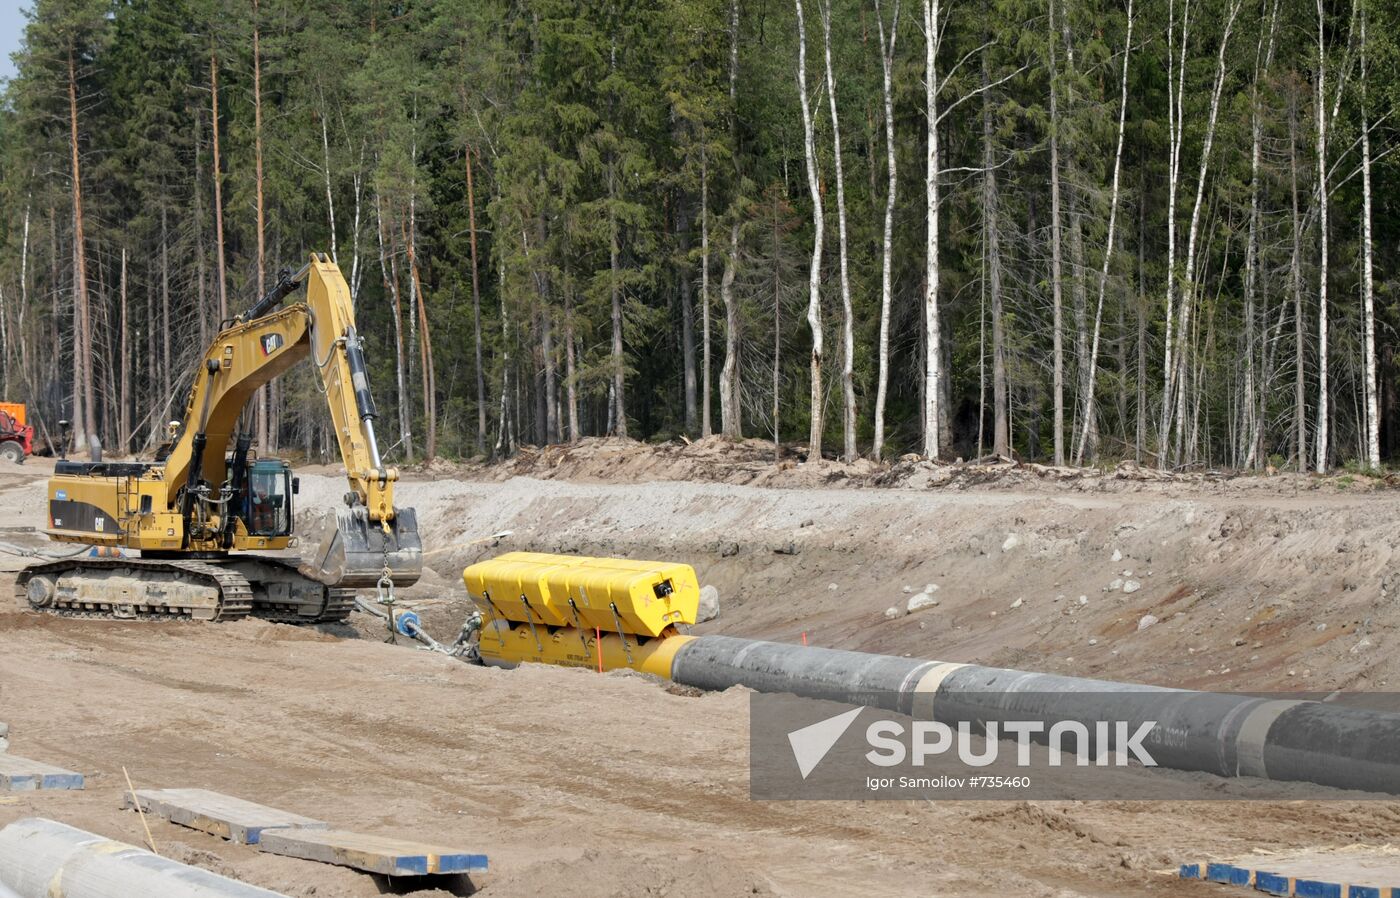 Nord Stream pipeline construction site